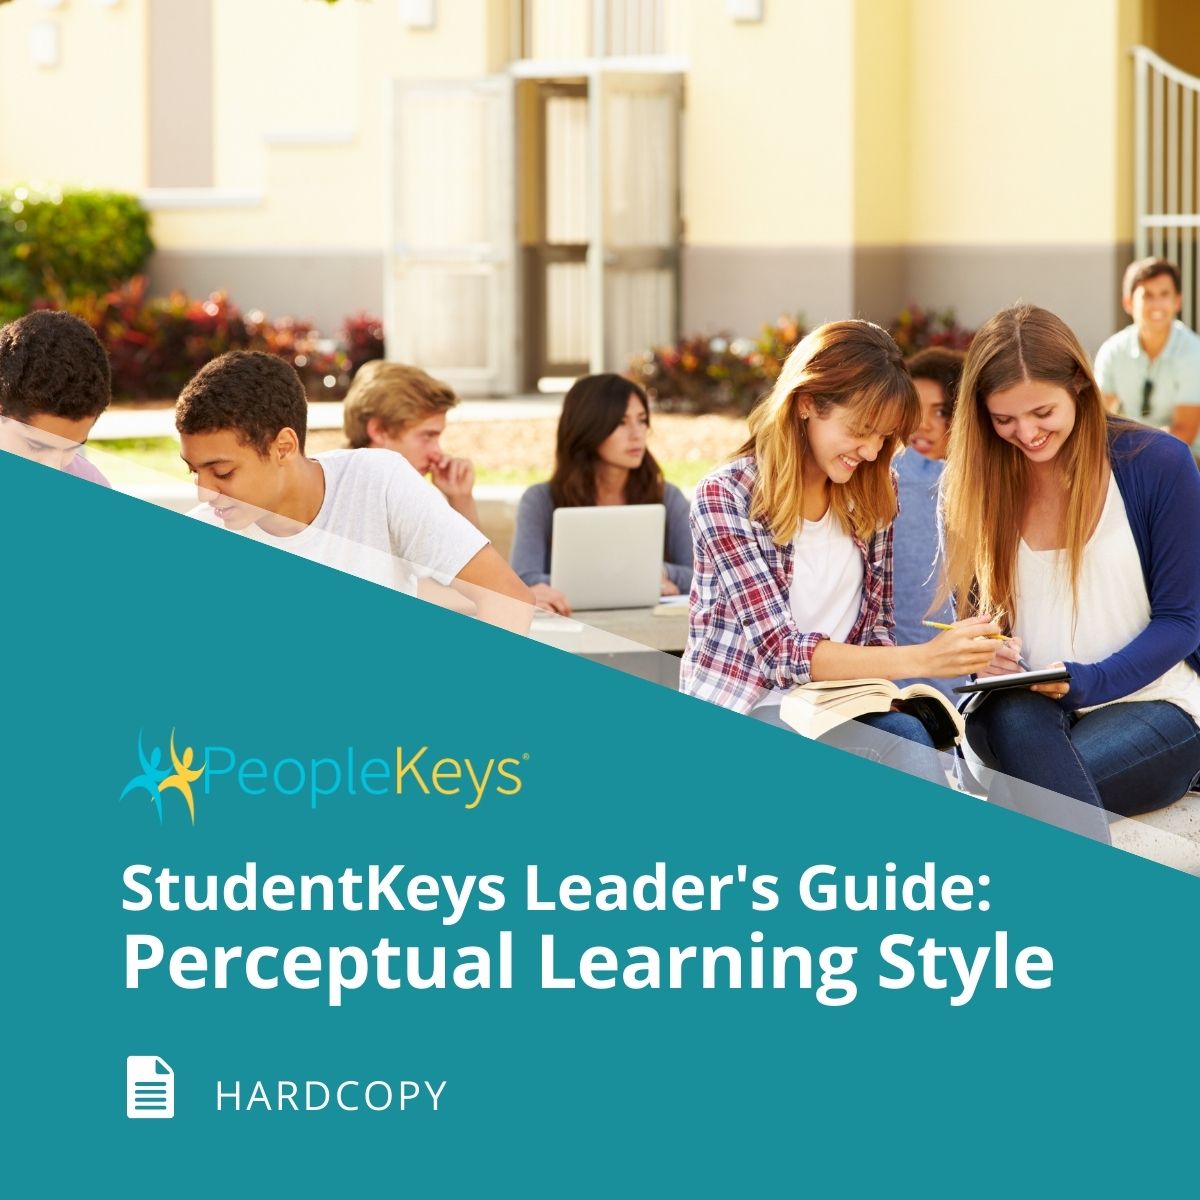 StudentKeys Leader’s Guide: Perceptual Learning Style (Hardcopy)